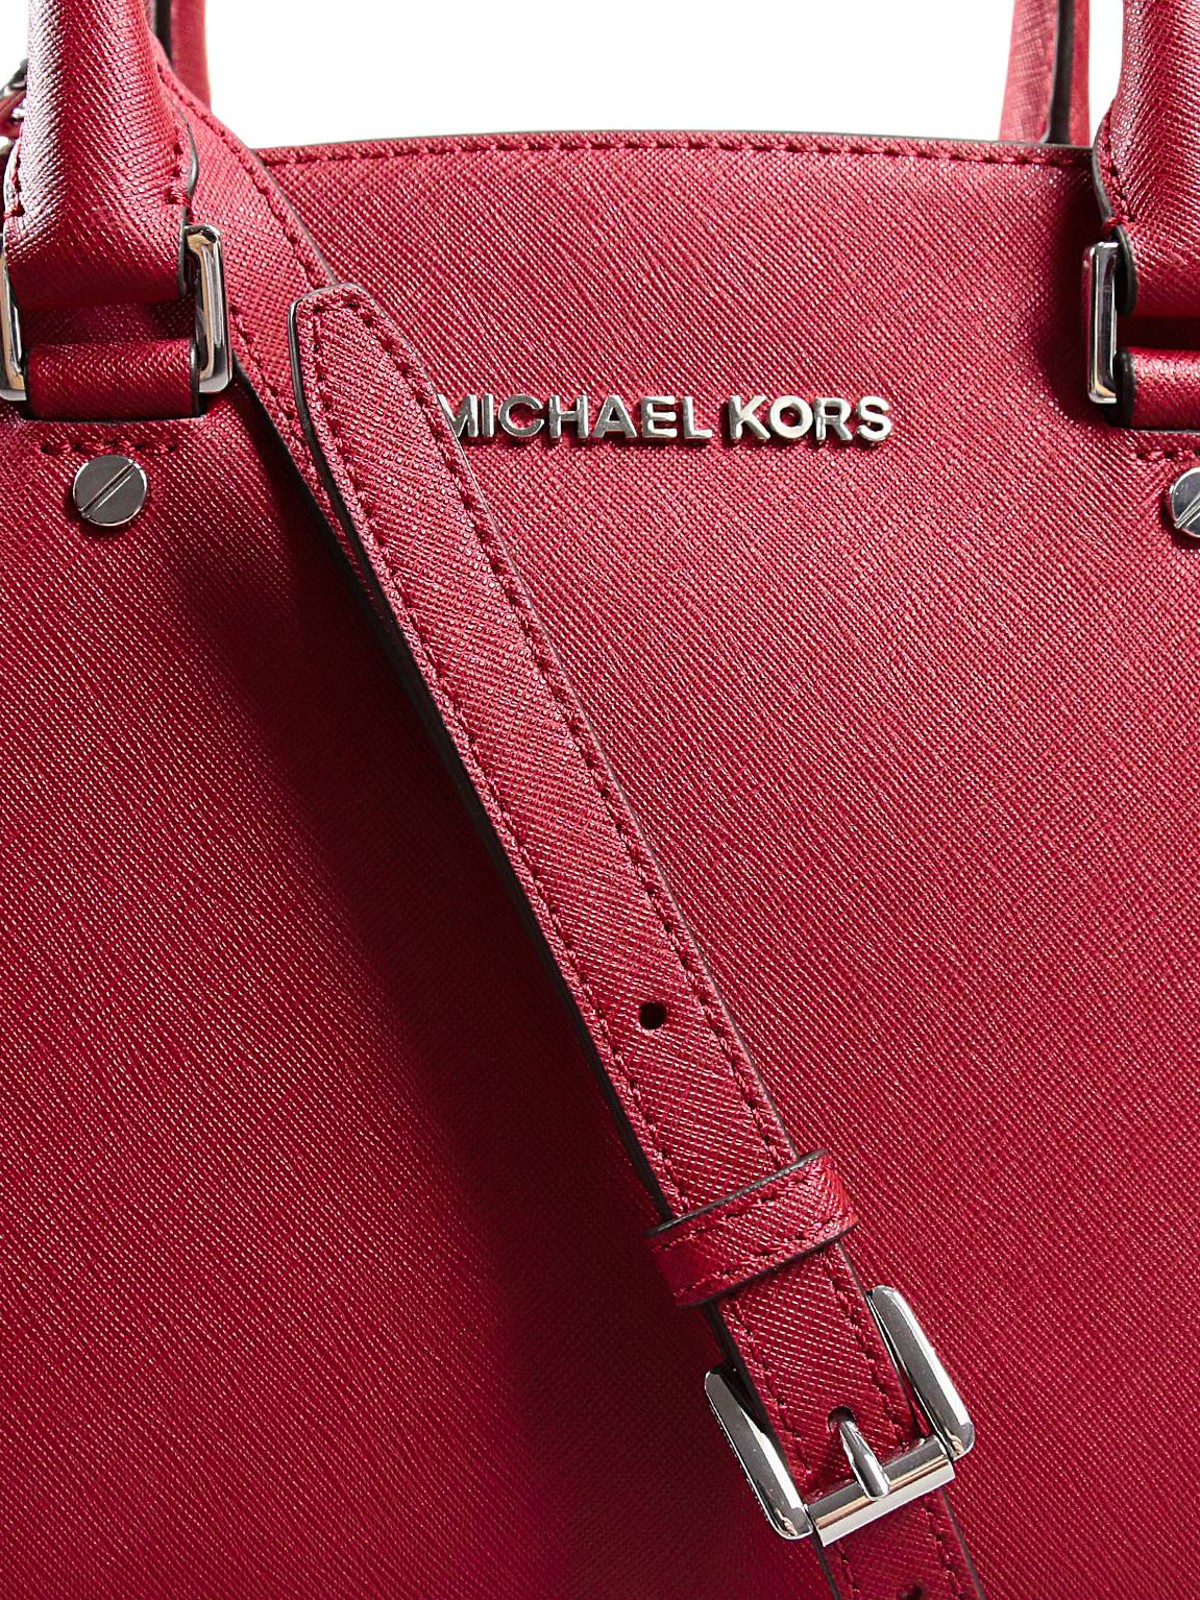 michael kors selma saffiano leather flap crossbody bag from